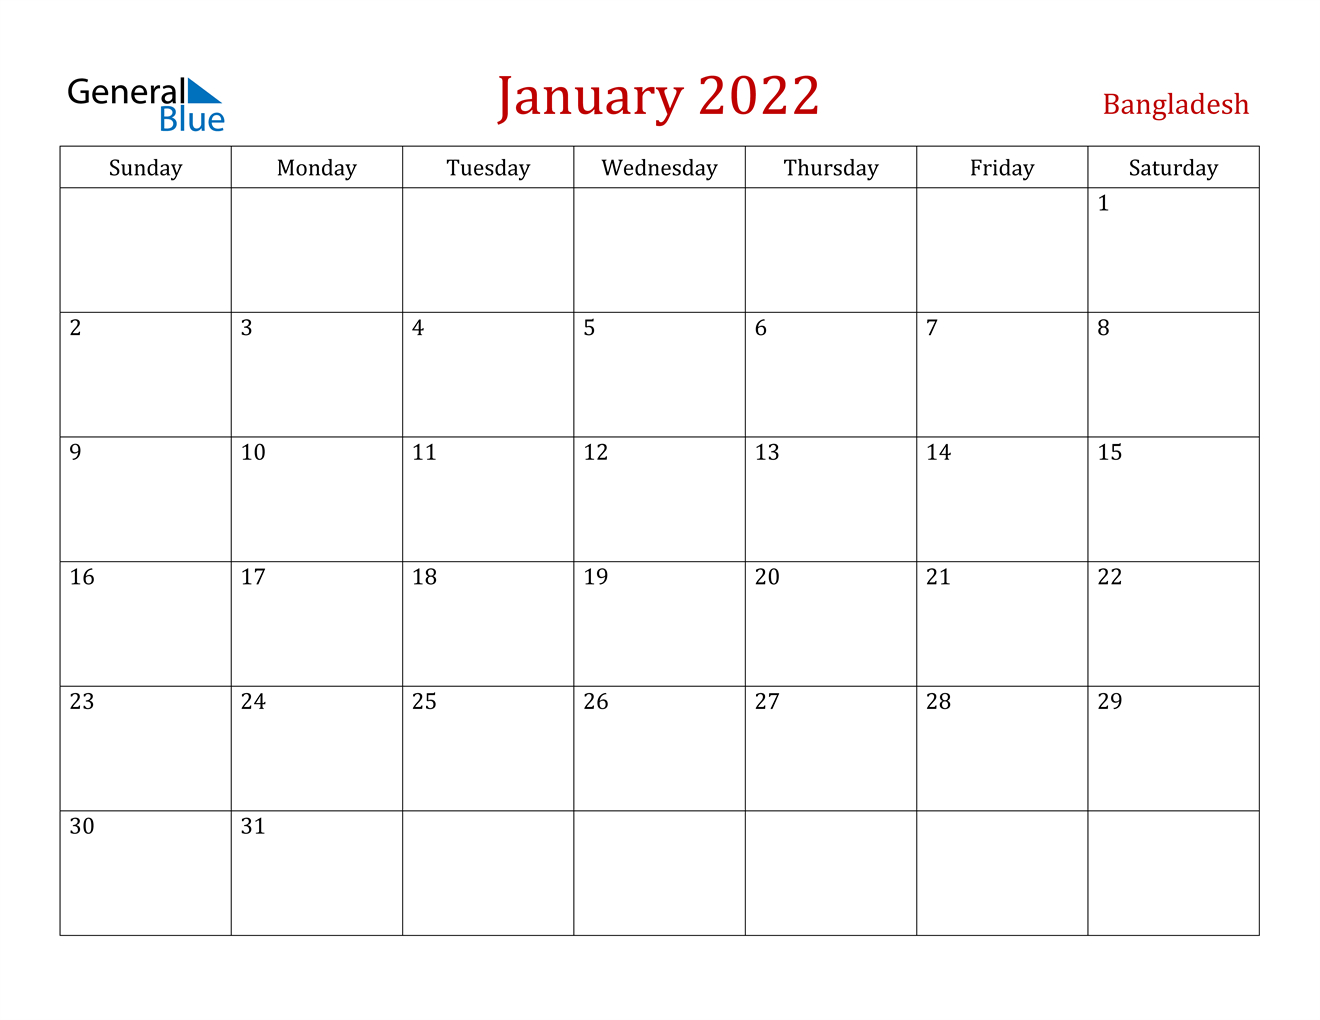 January 2022 Calendar - Bangladesh